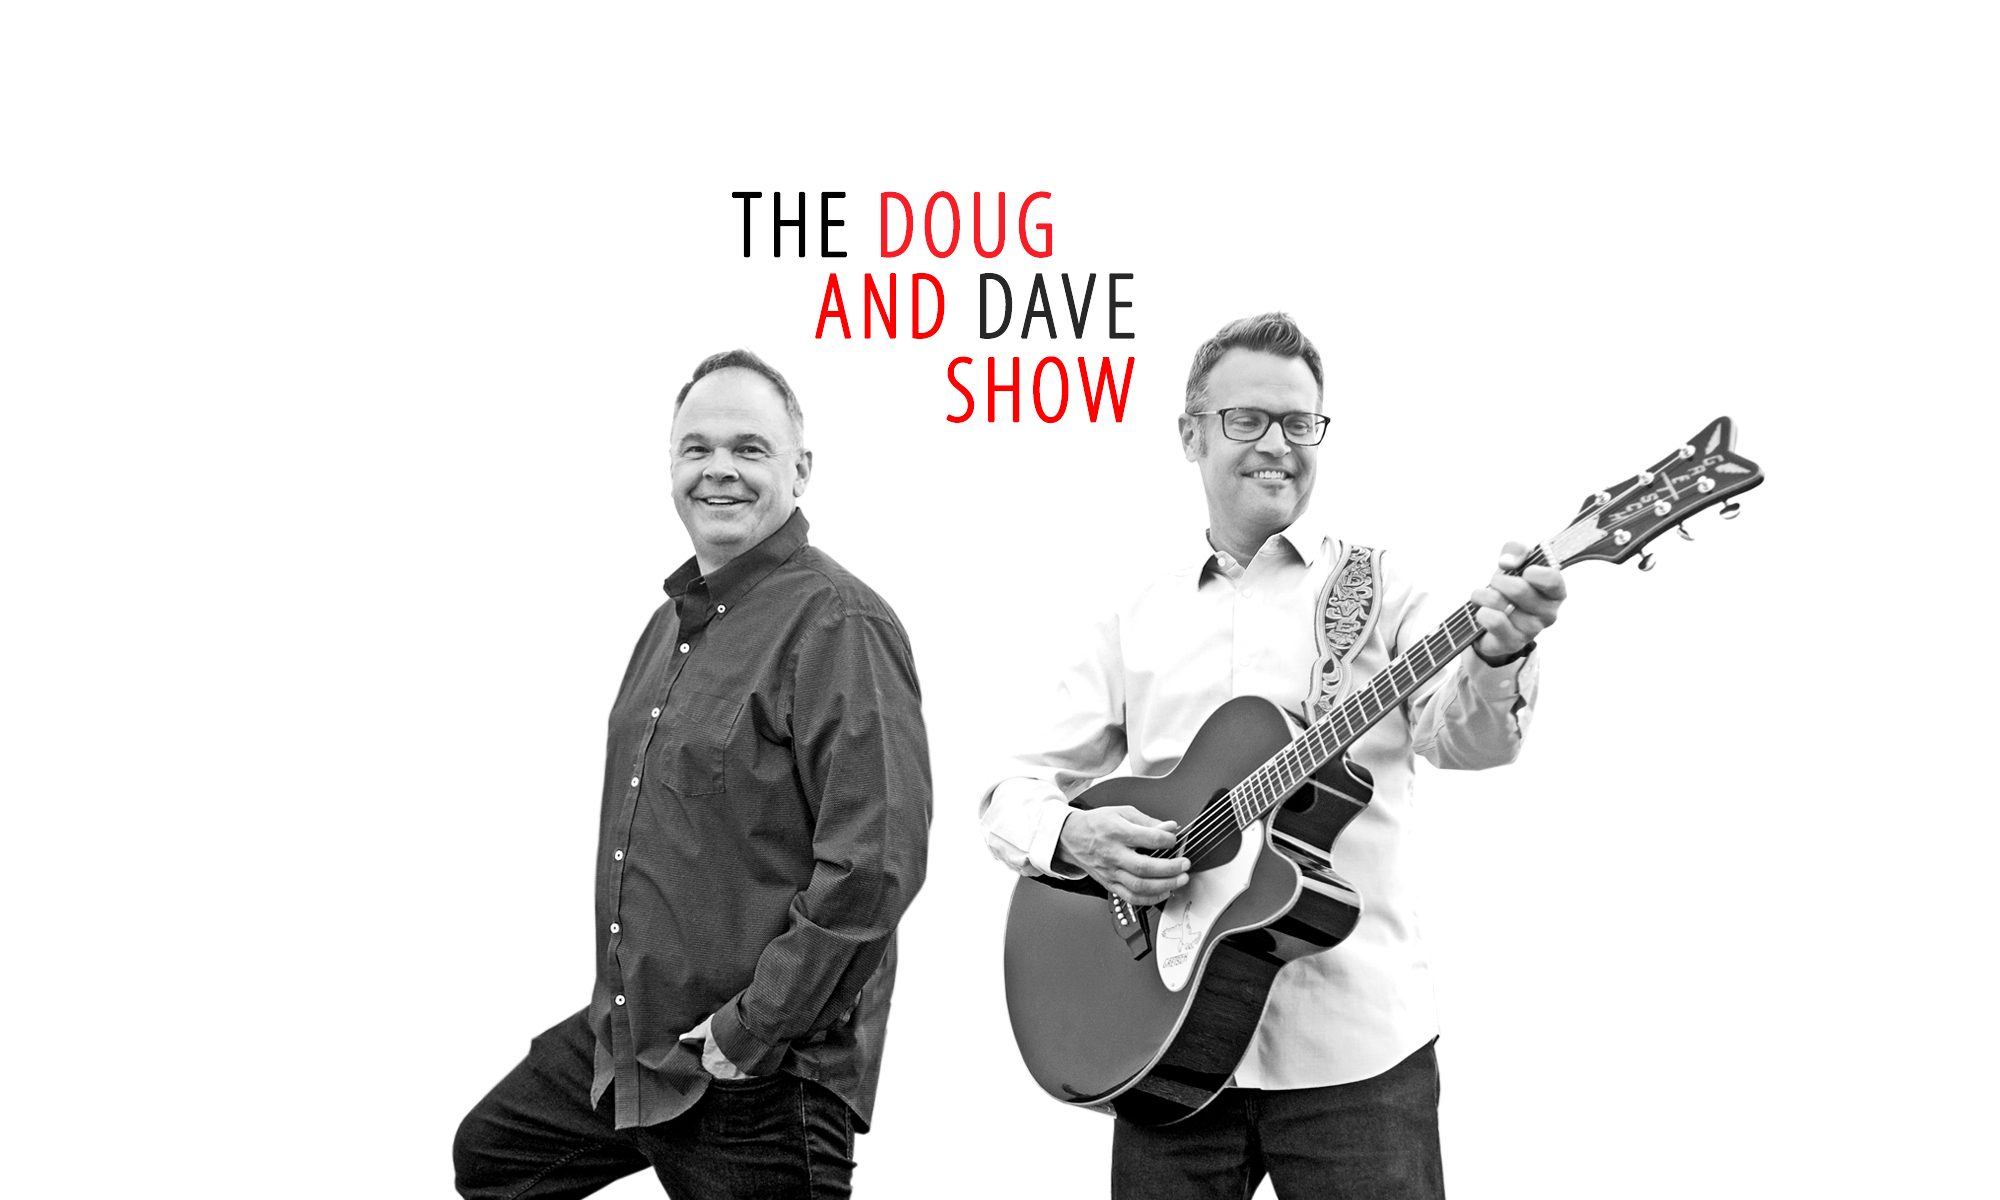 The Doug and Dave Show